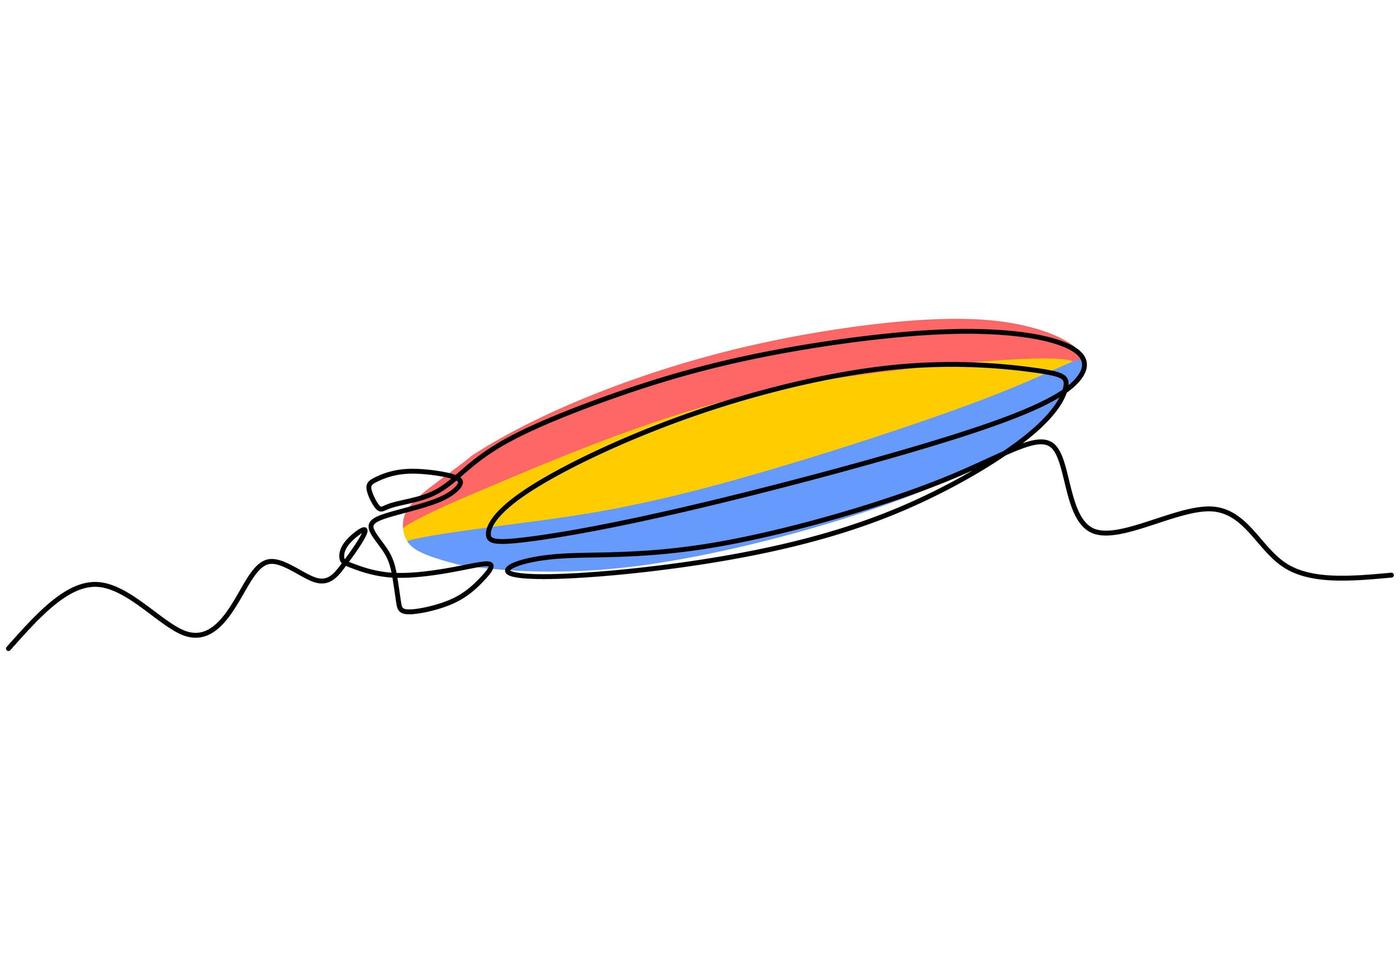 One line air balloon. Vector illustration of Airplane Airship Balloon rocket. Minimalism continuous hand drawn